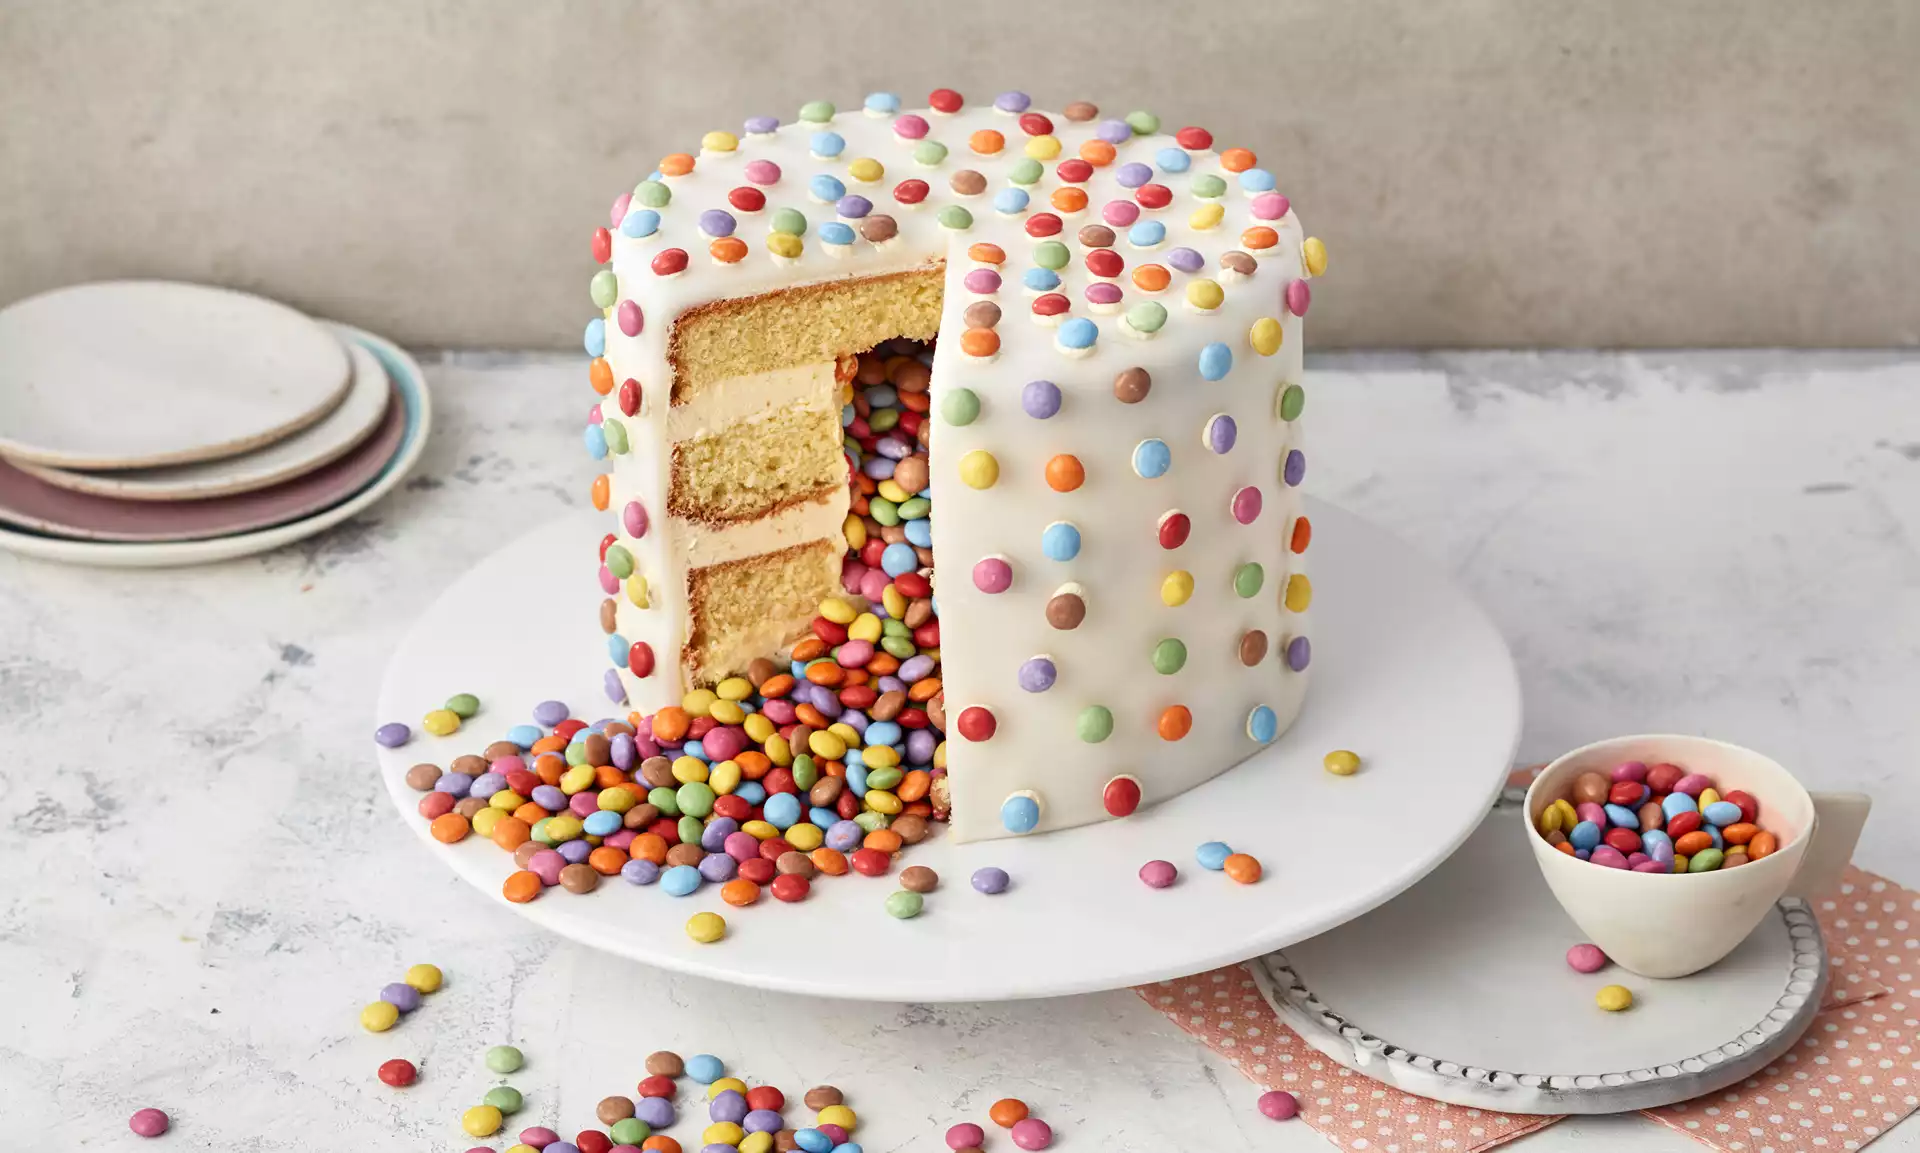 SKITTLES Recipe Ideas! Cakes, Sprinkles & More…